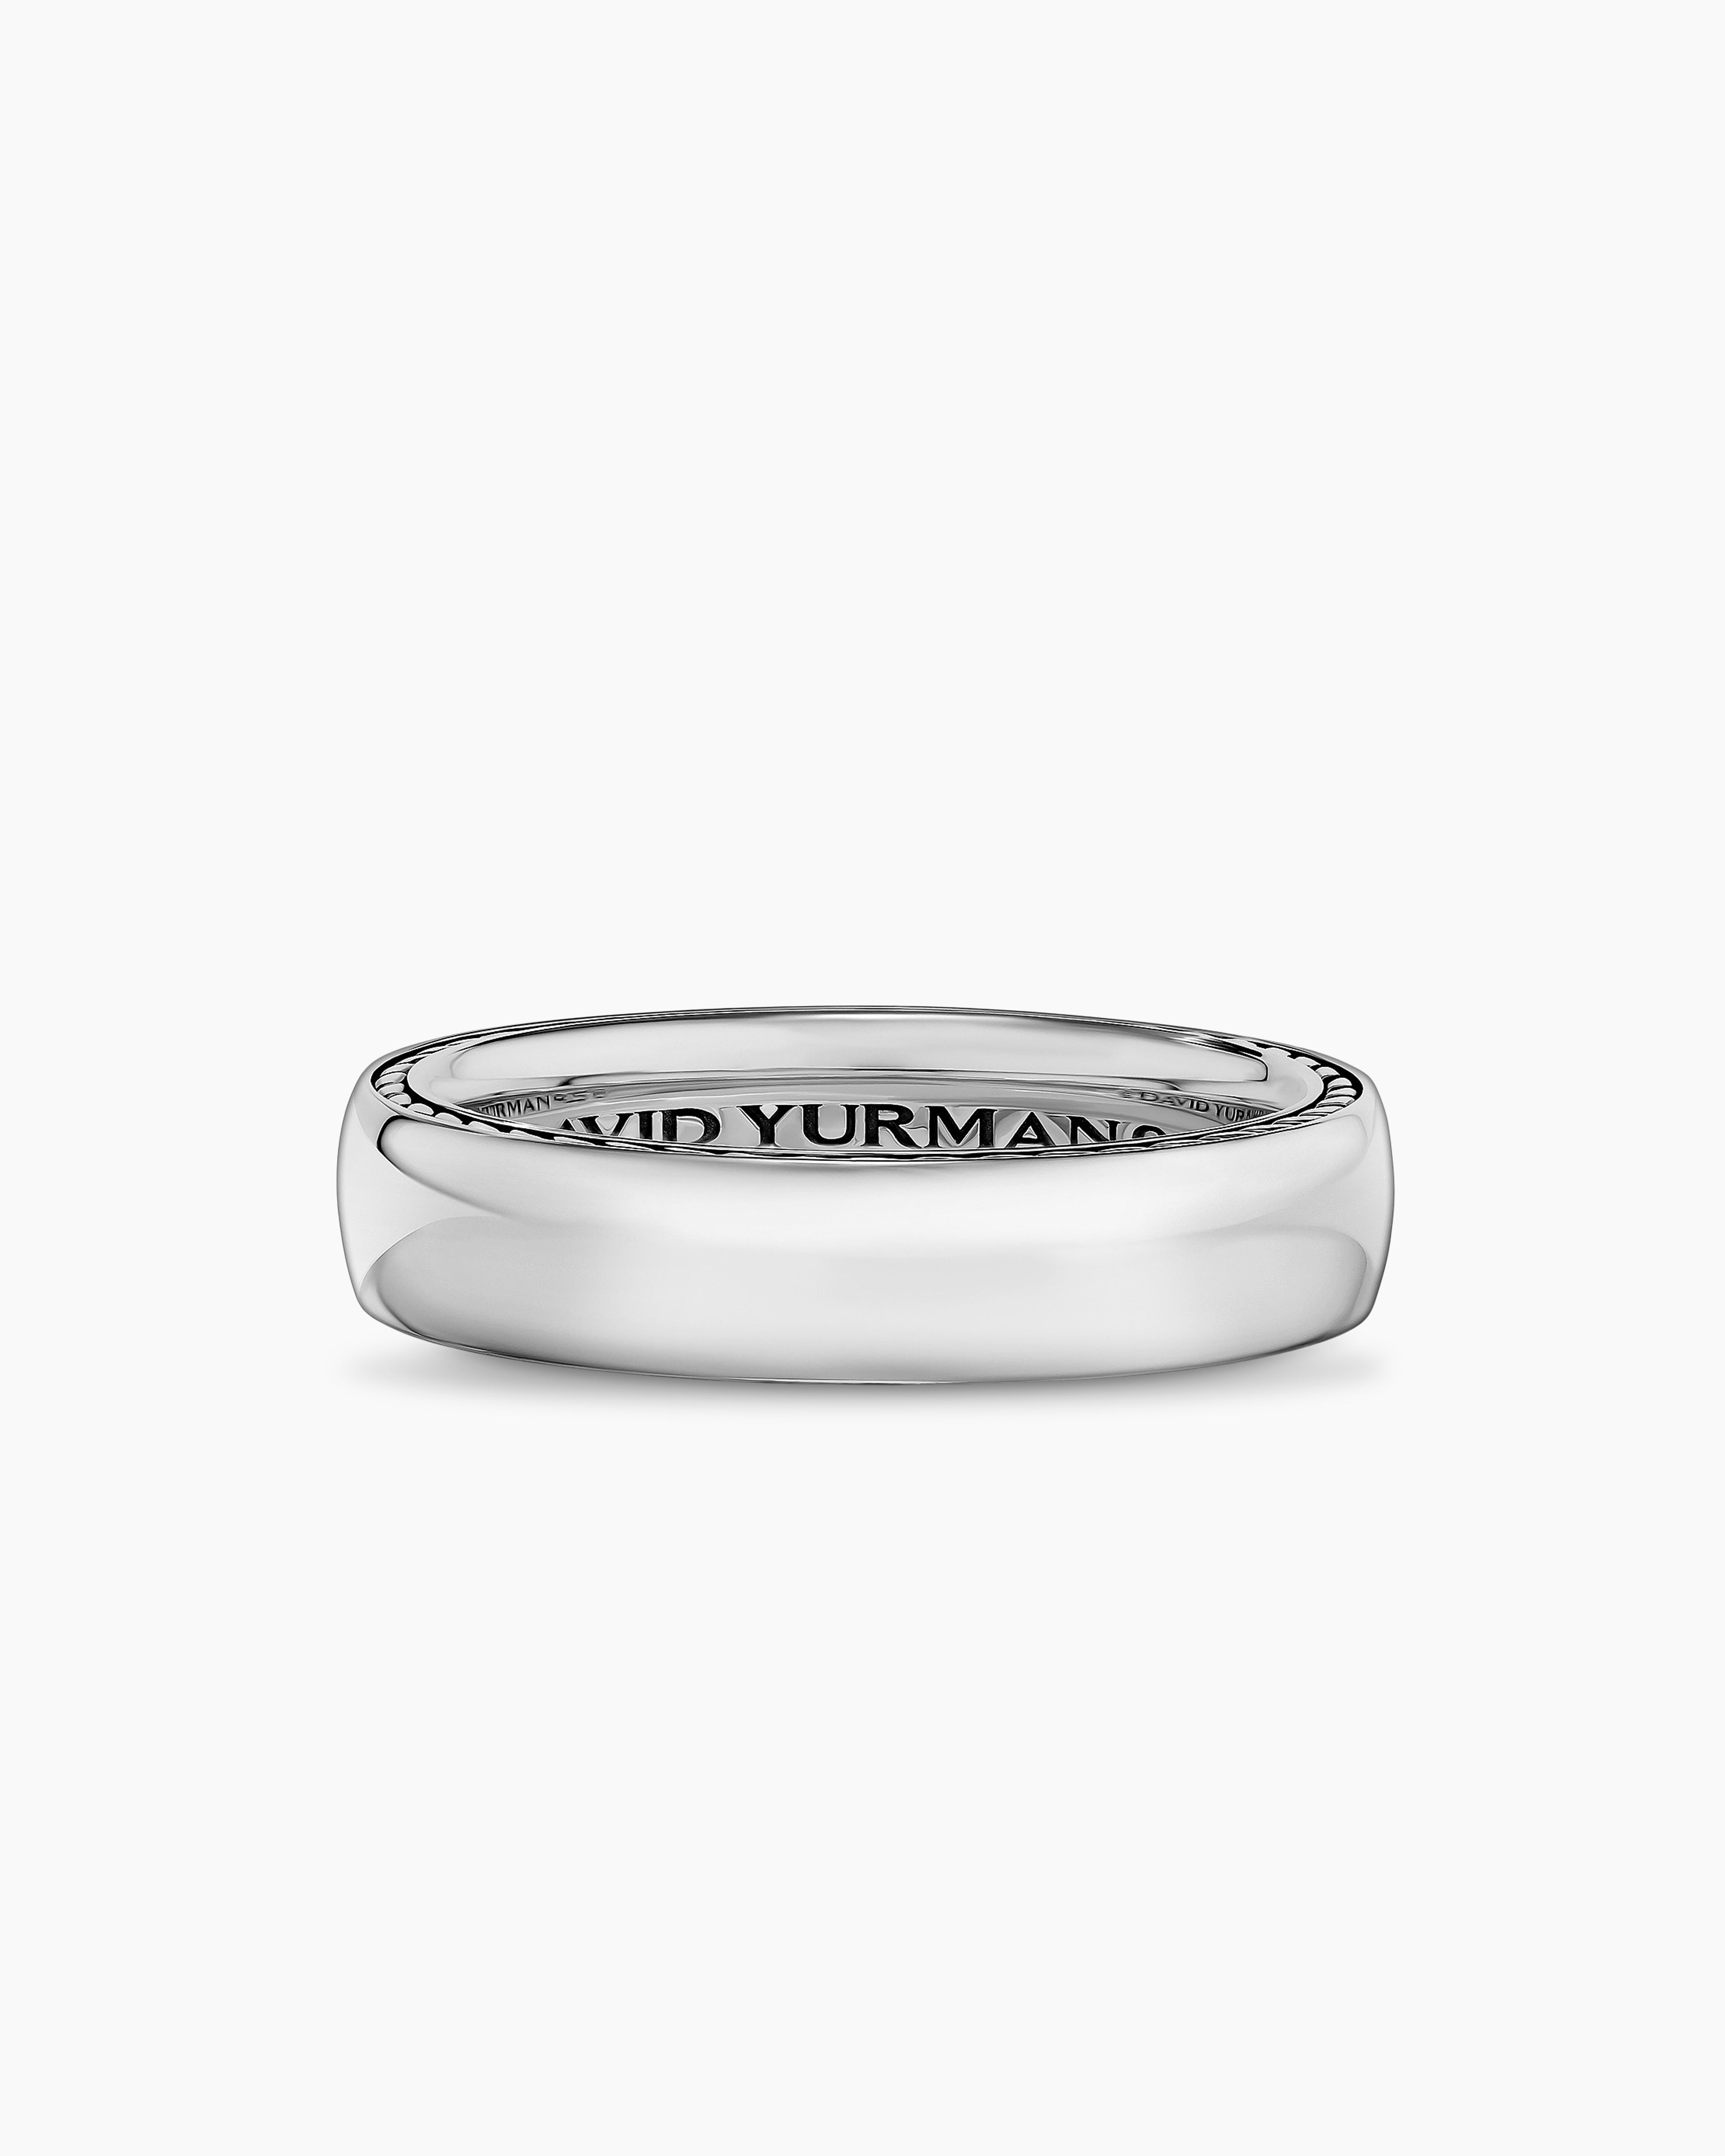 David Yurman Men's Waves Band Ring - Sterling Silver - Size 10